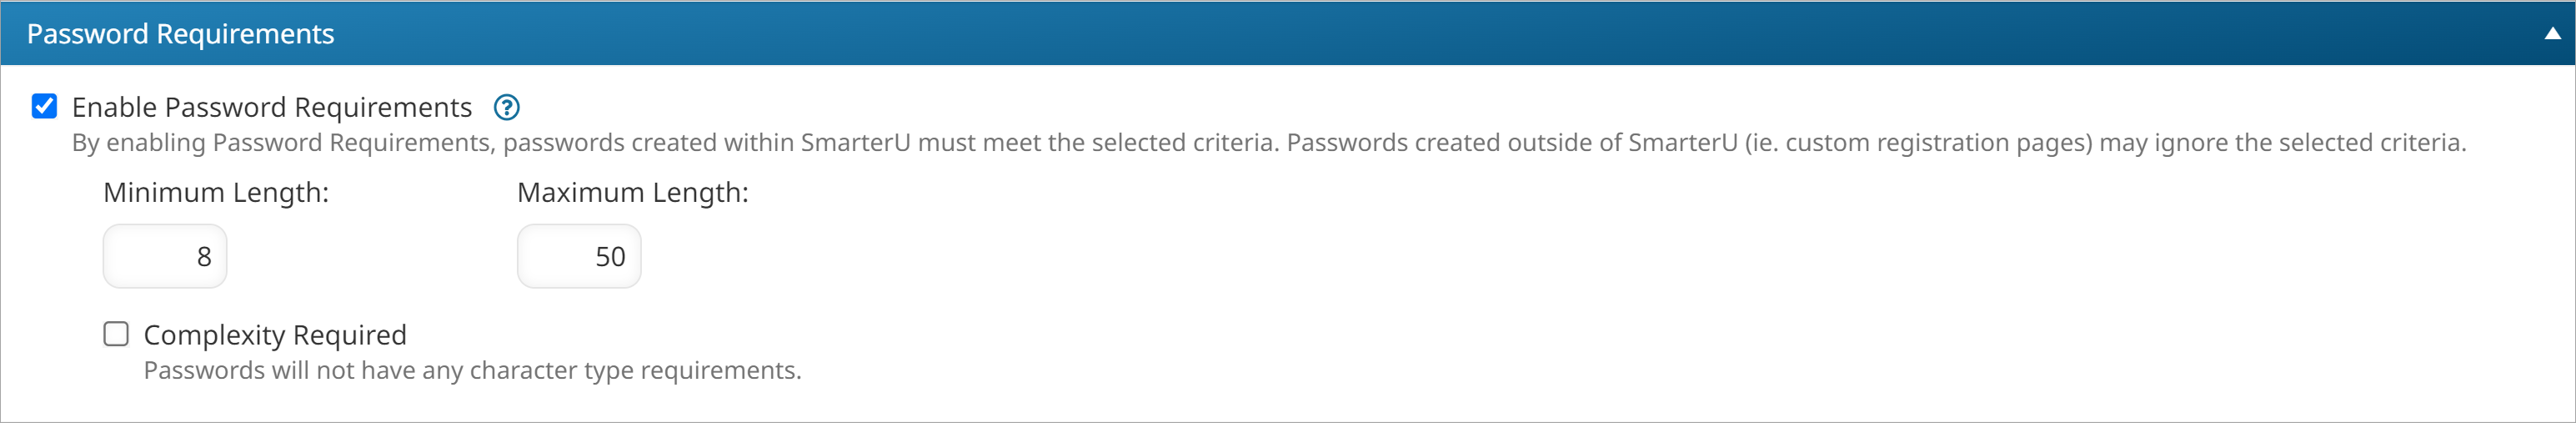 Account Profile - Password Requirements 20220921(1)